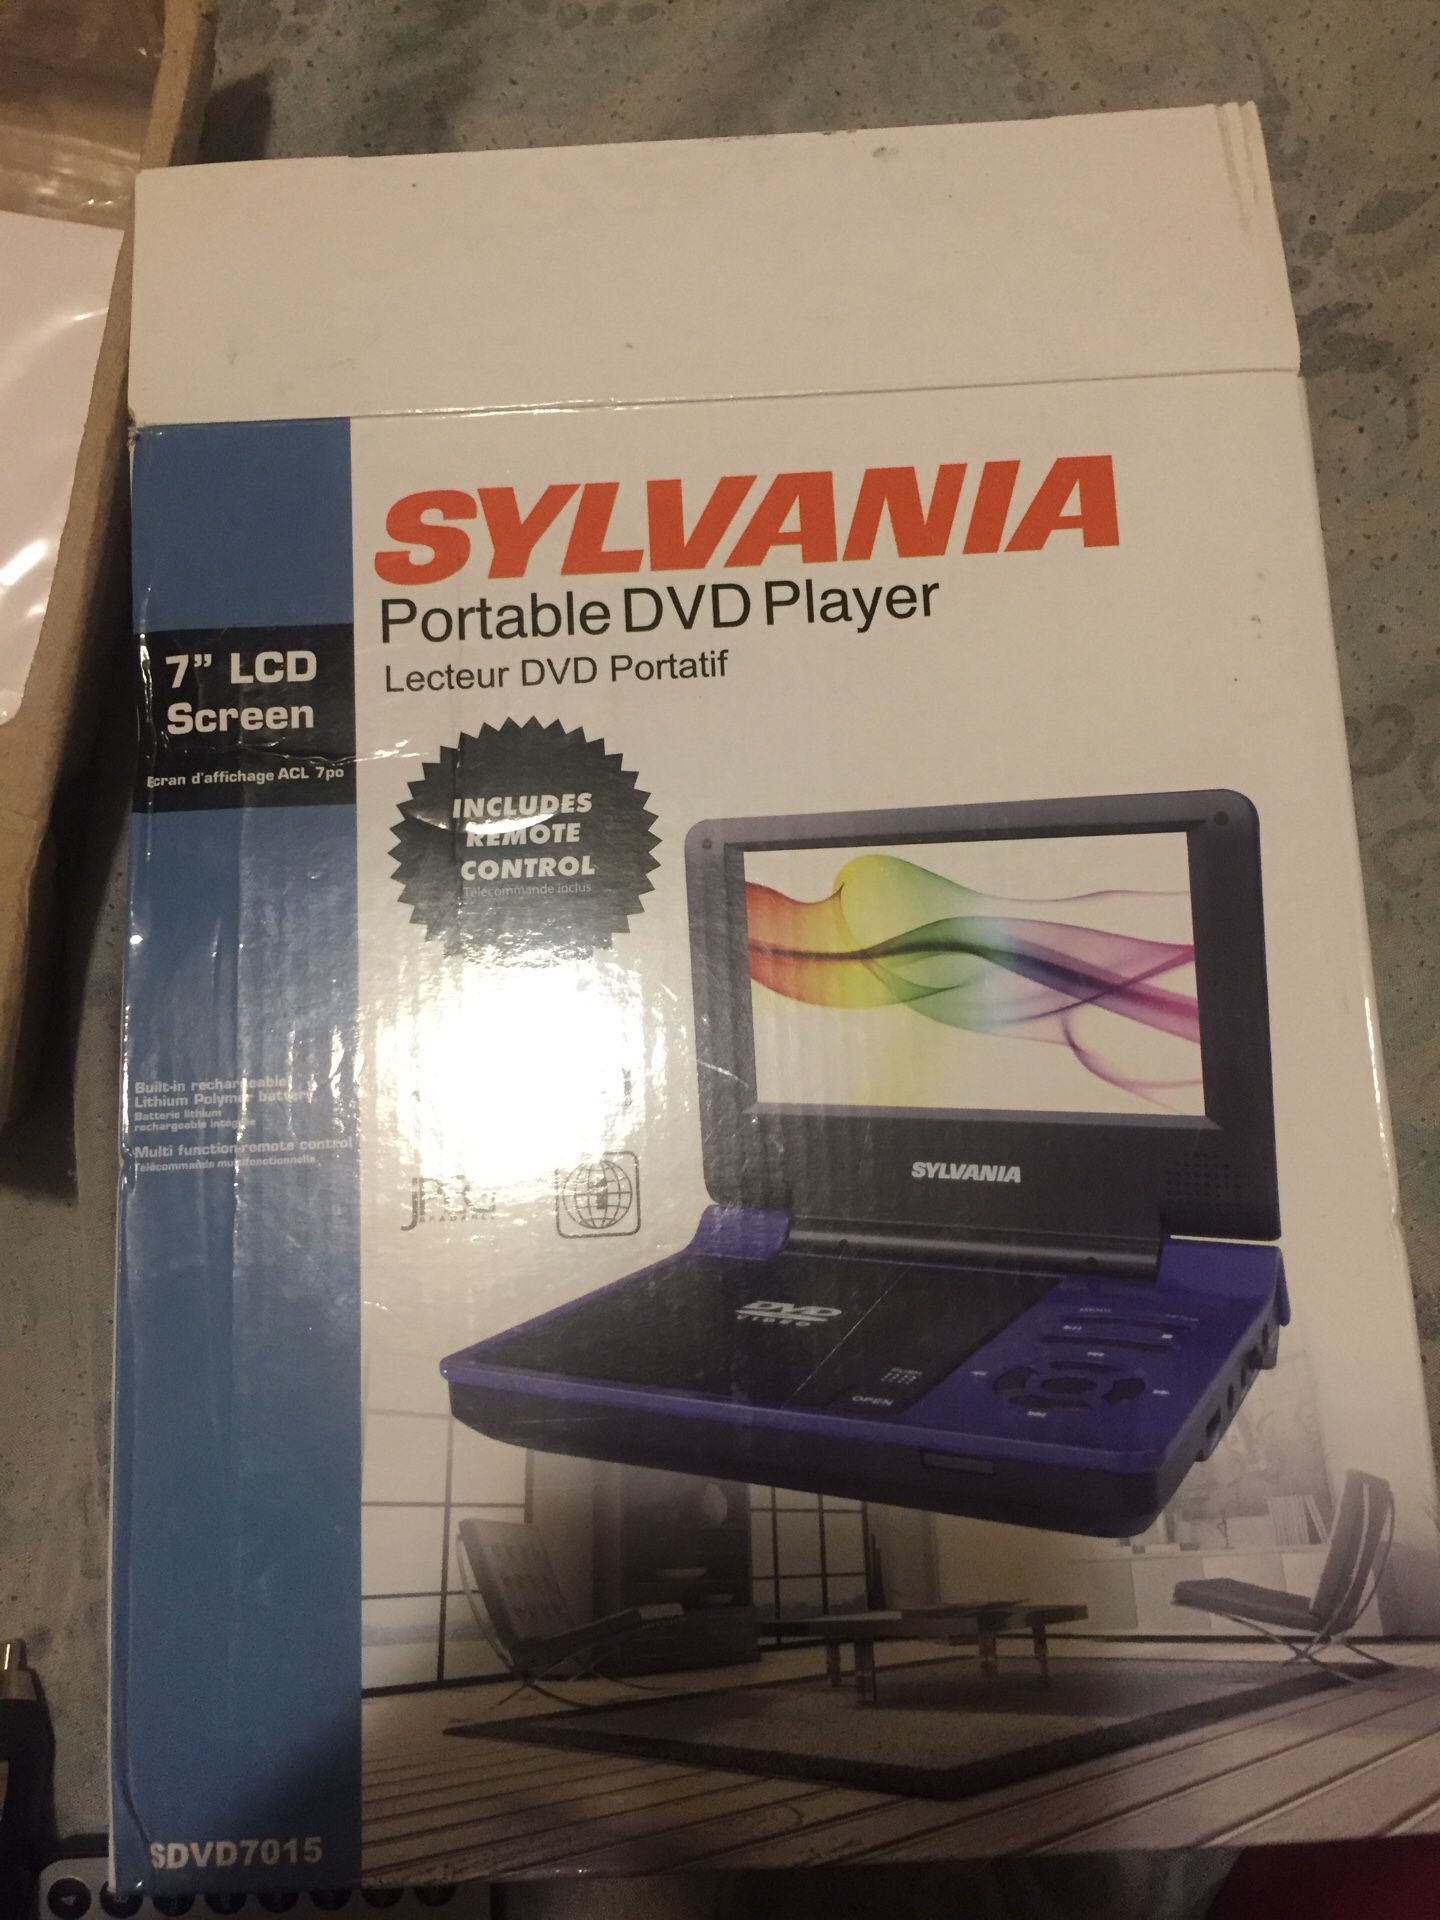 Blue and black sylvania portable DVD player